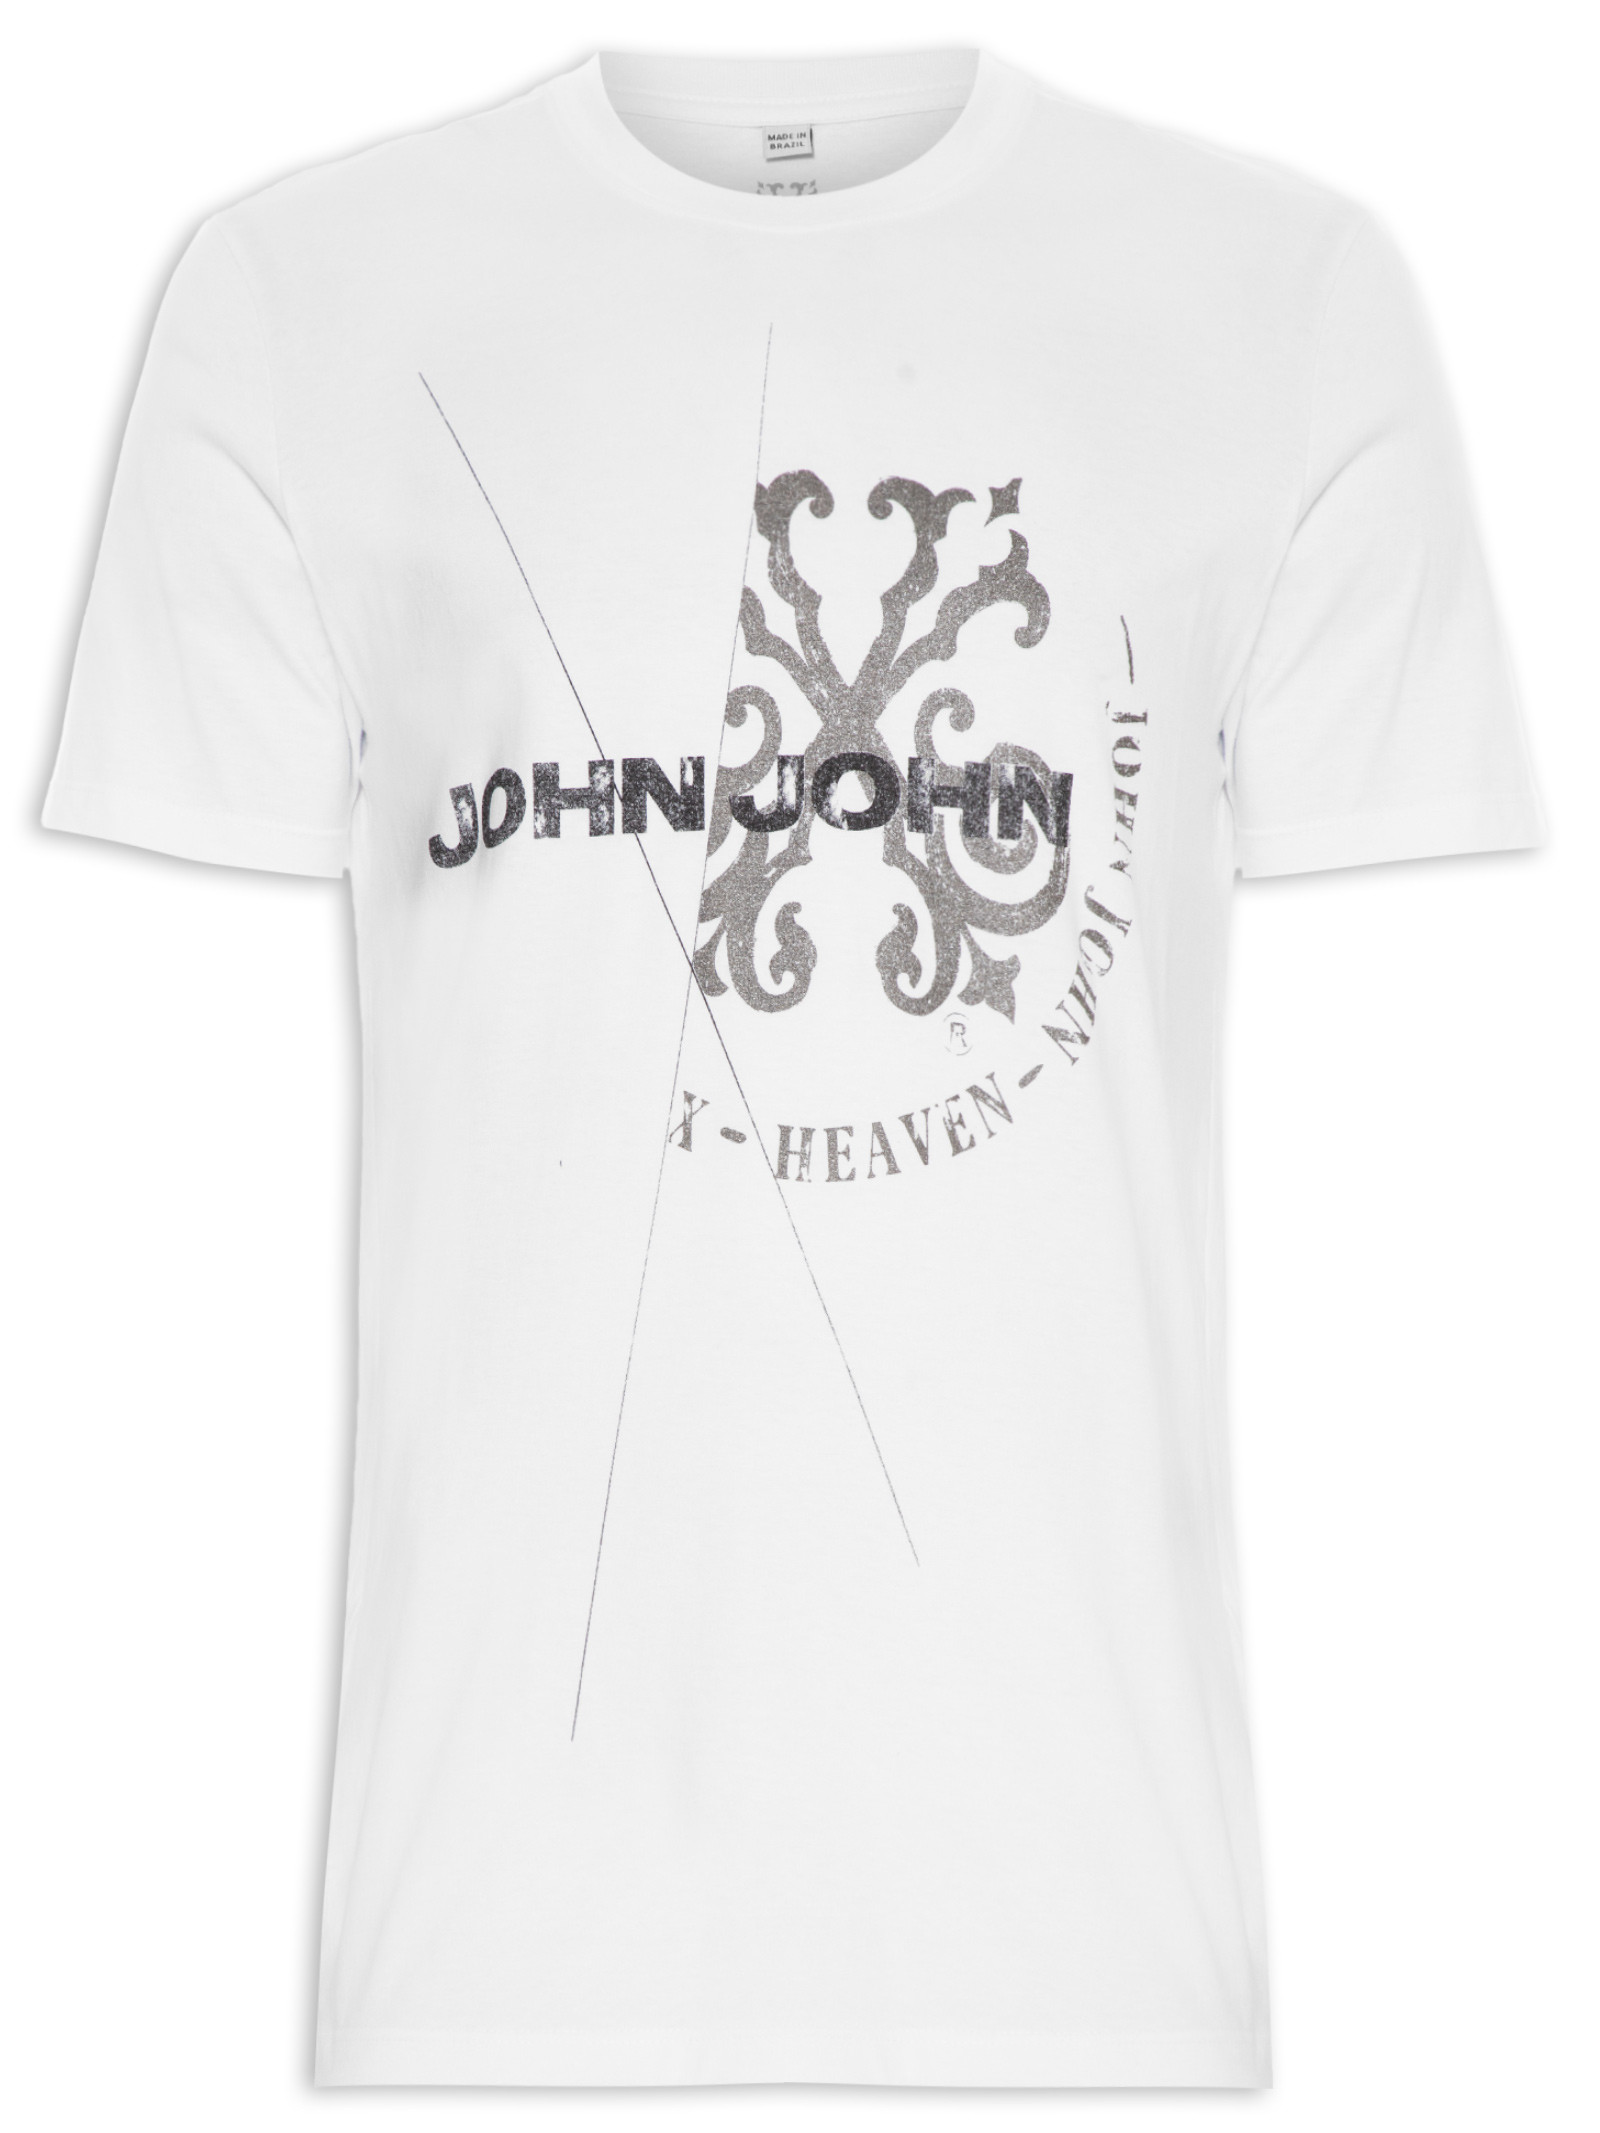 T-shirt Masculina Rg New Botone - John John - Branco - Shop2gether